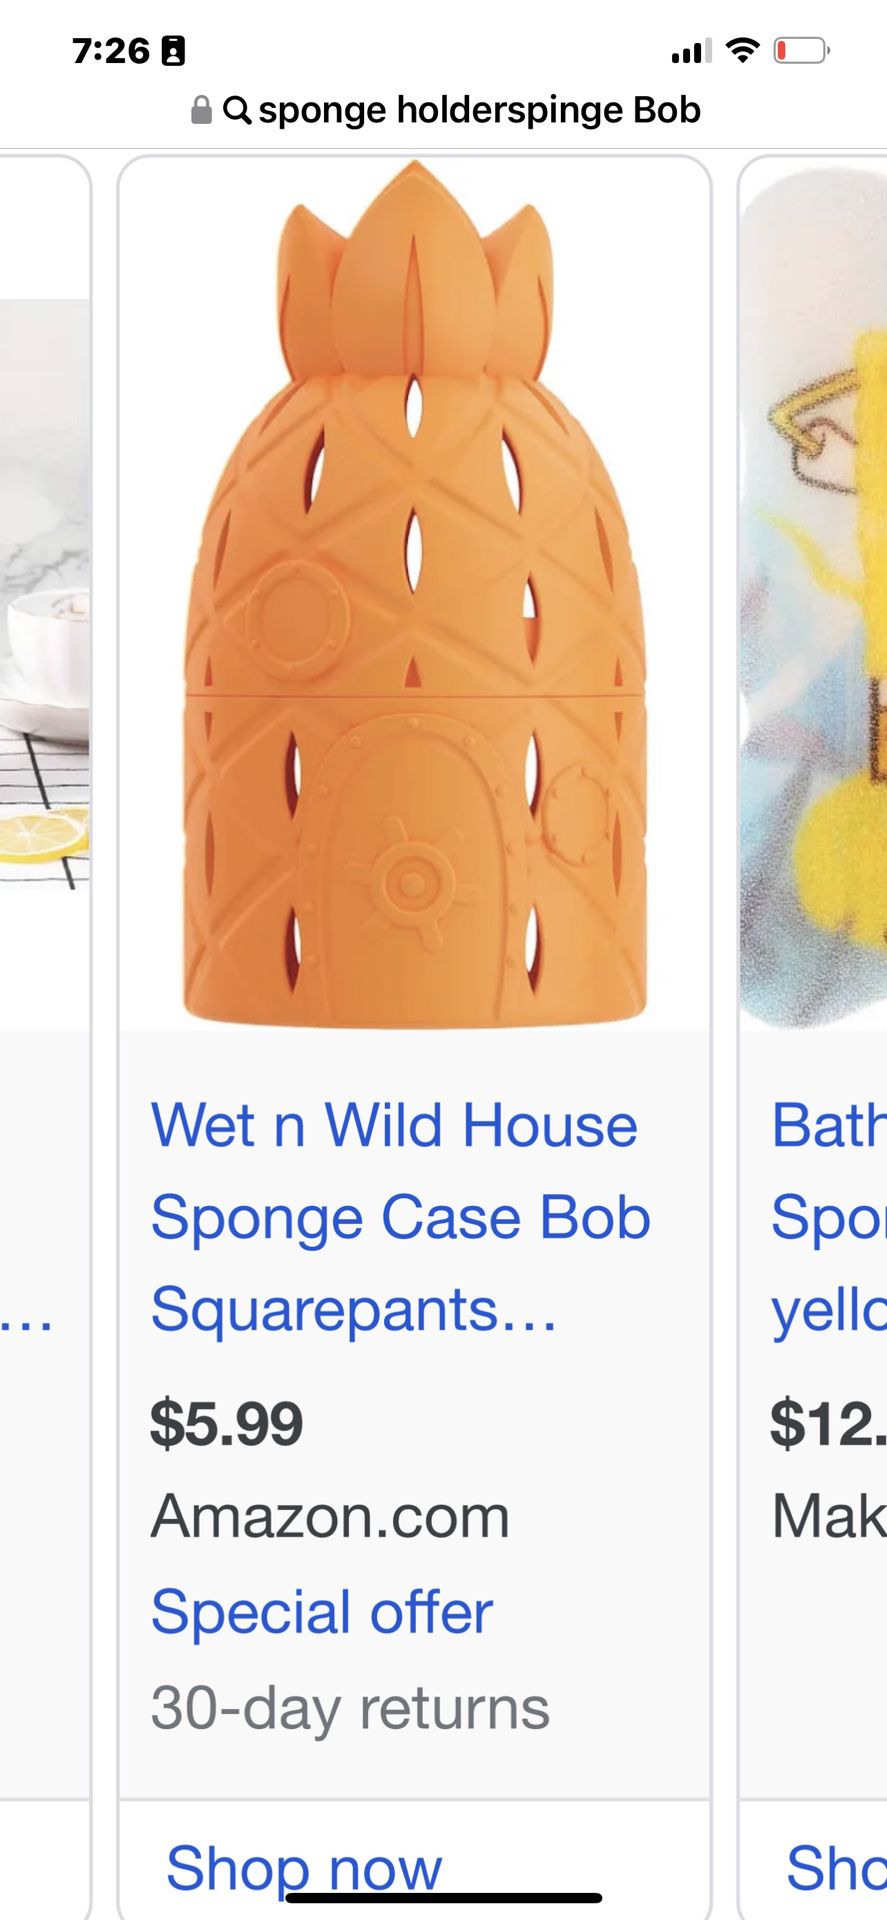 Sponge Bob Makeup 